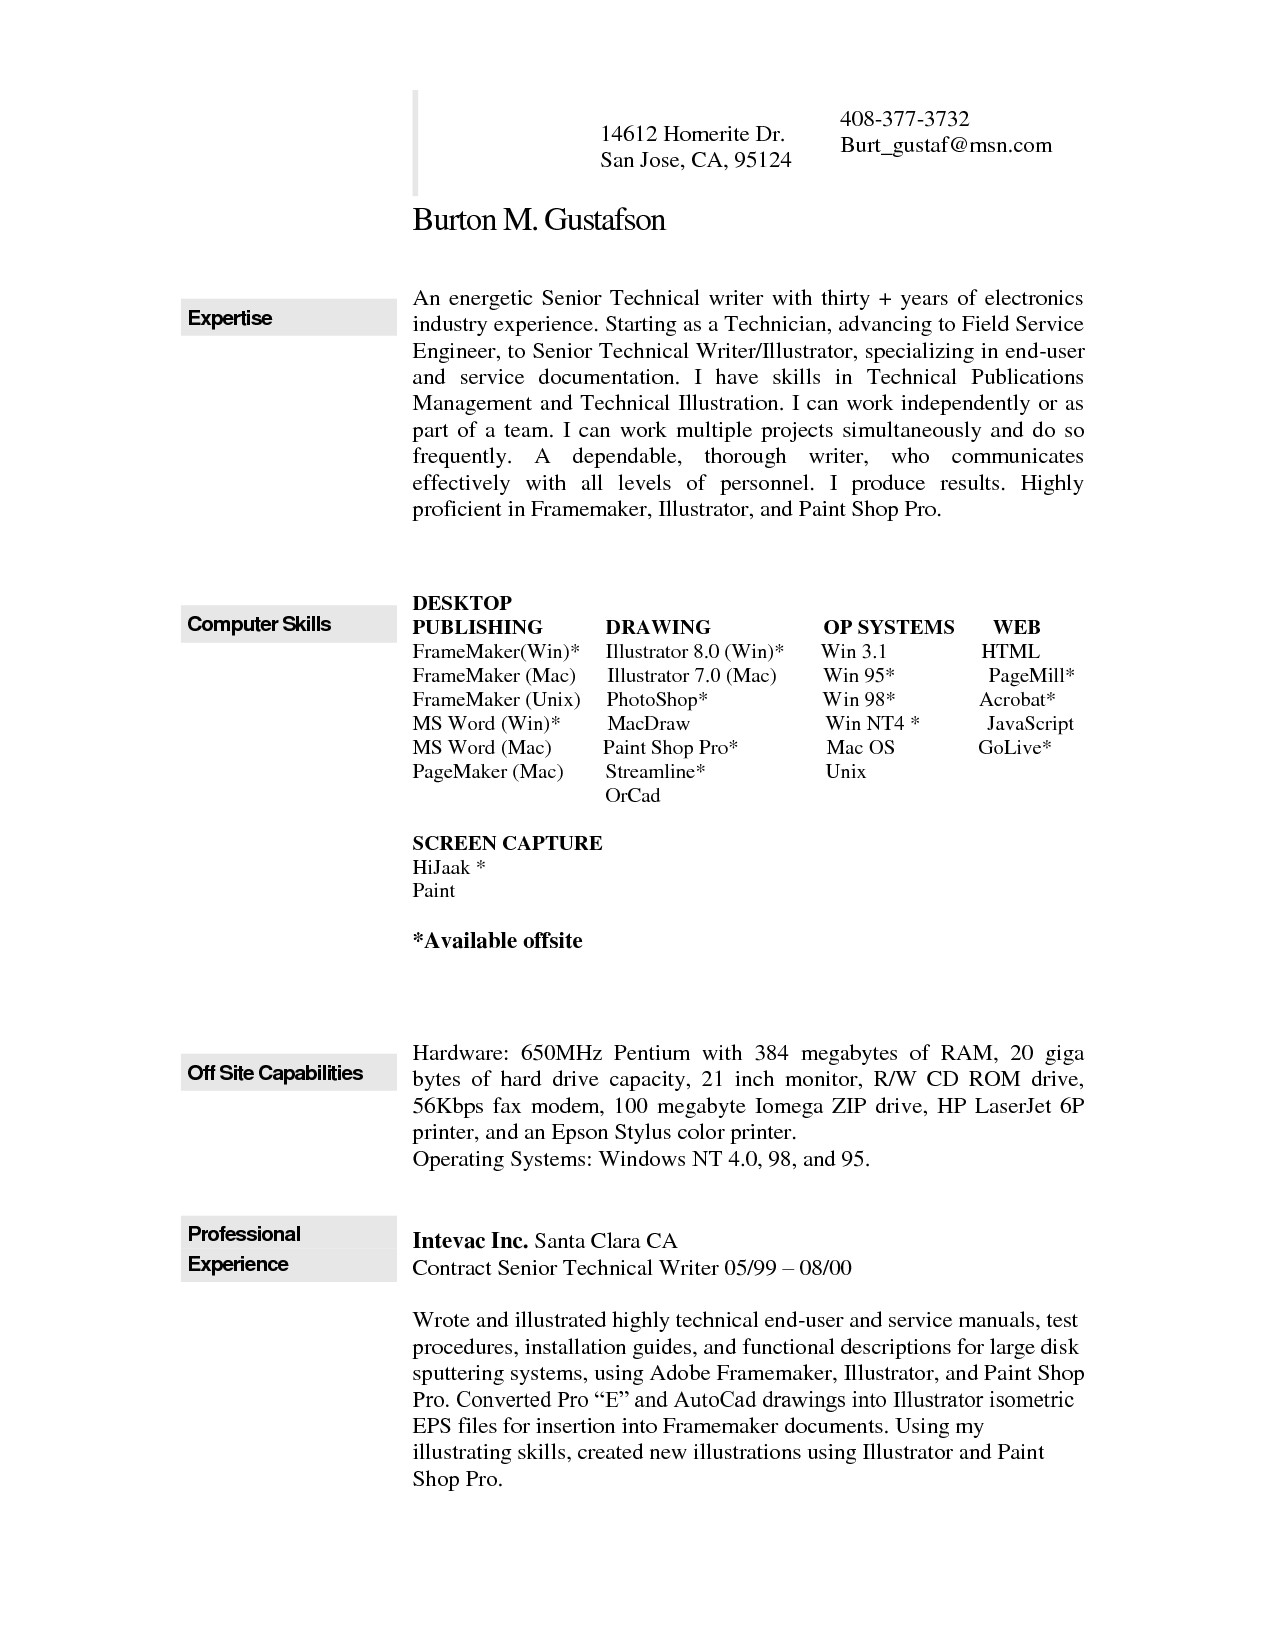 resume template mac 2239